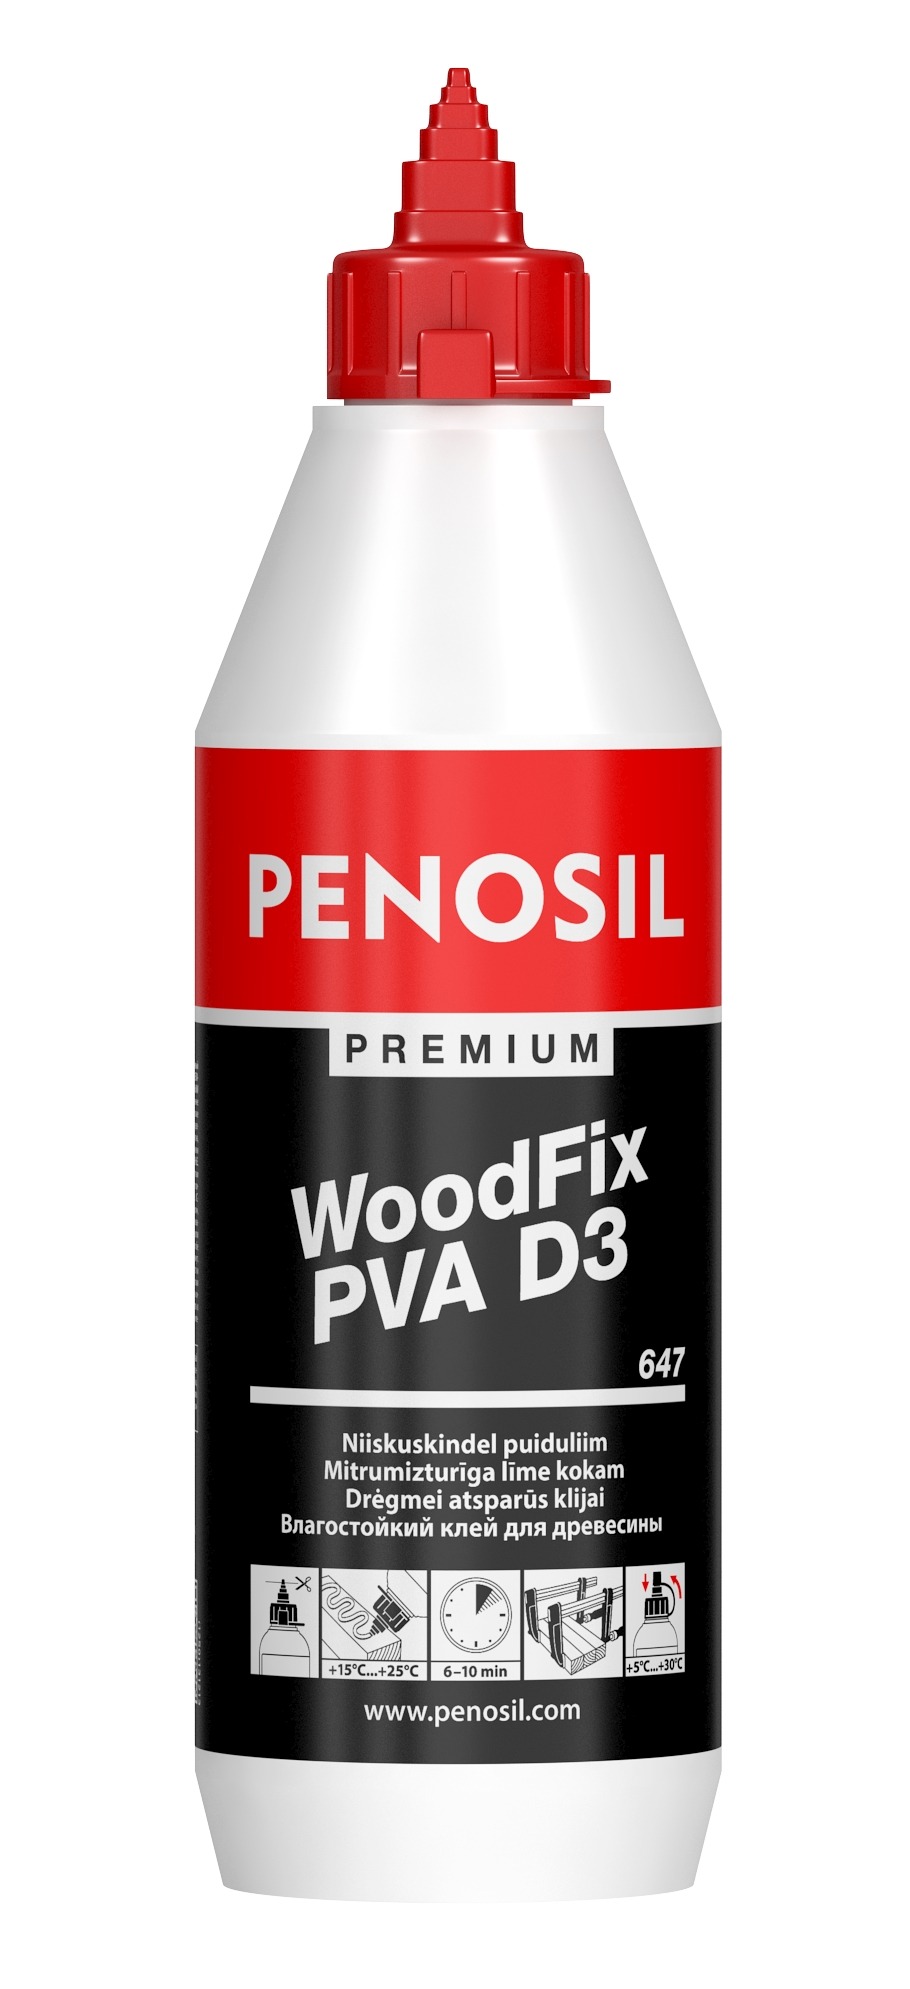 PENOSIL Premium WoodFix PVA D3 647    